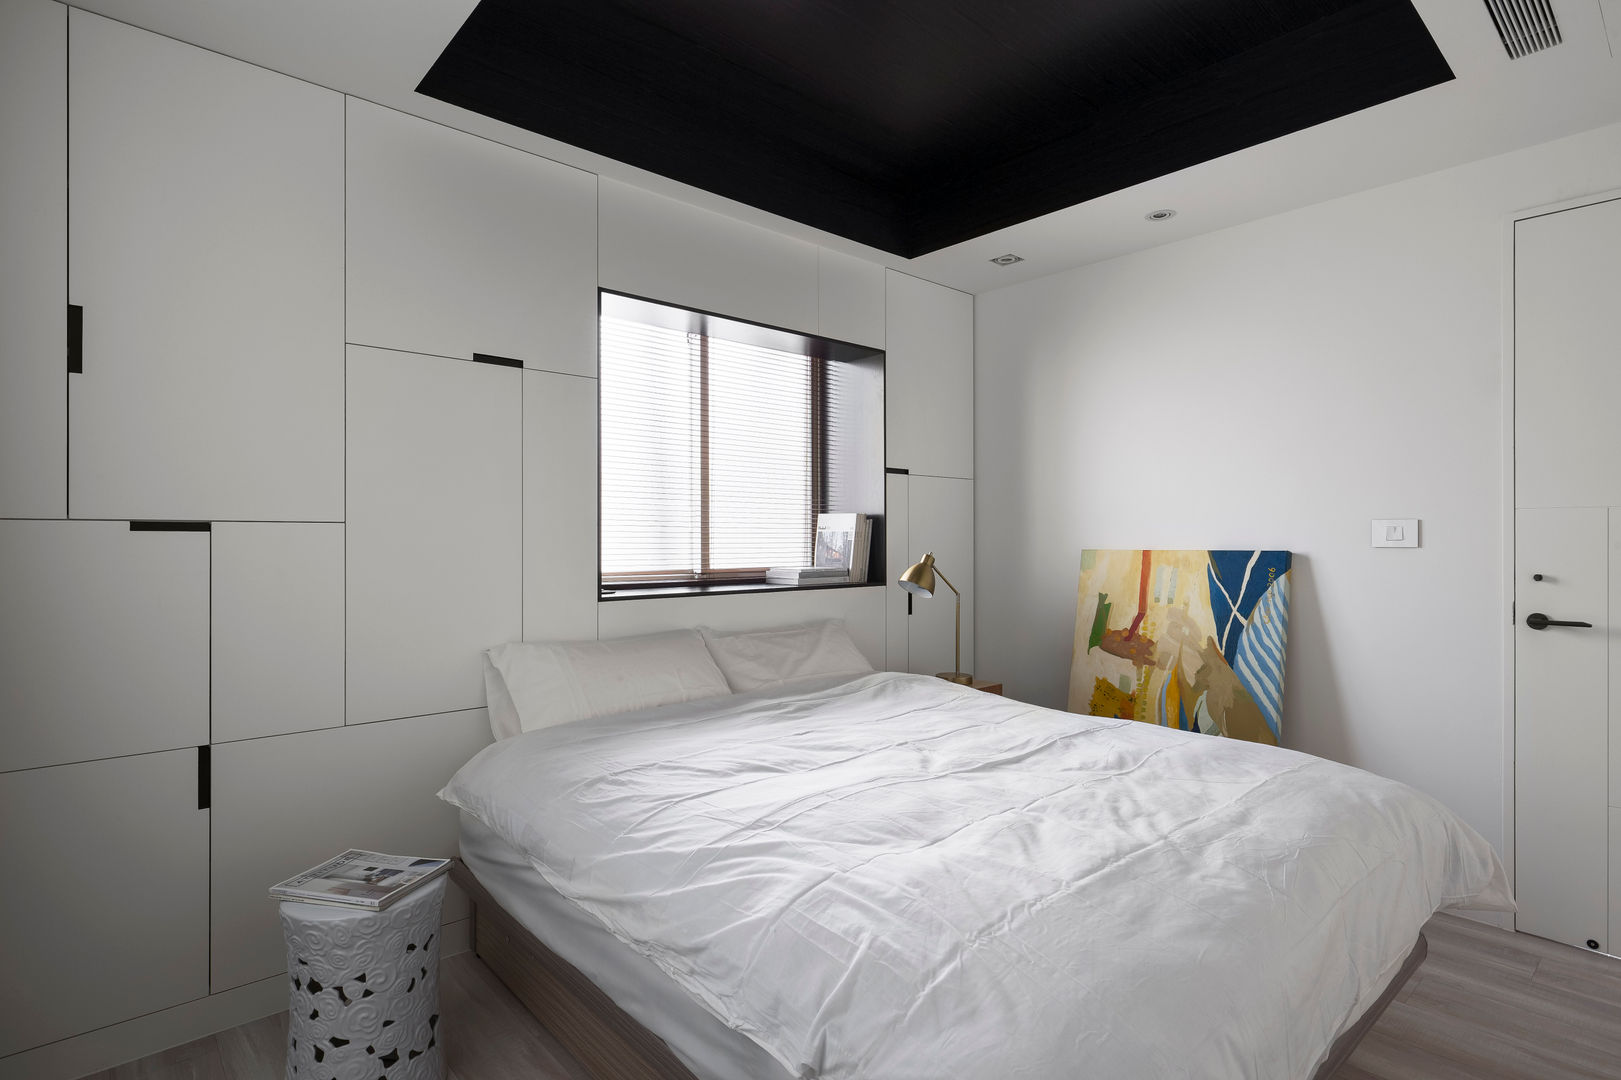 No.2 Modern Composition by Studio In2, Studio In2 深活生活設計 Studio In2 深活生活設計 Minimalist bedroom